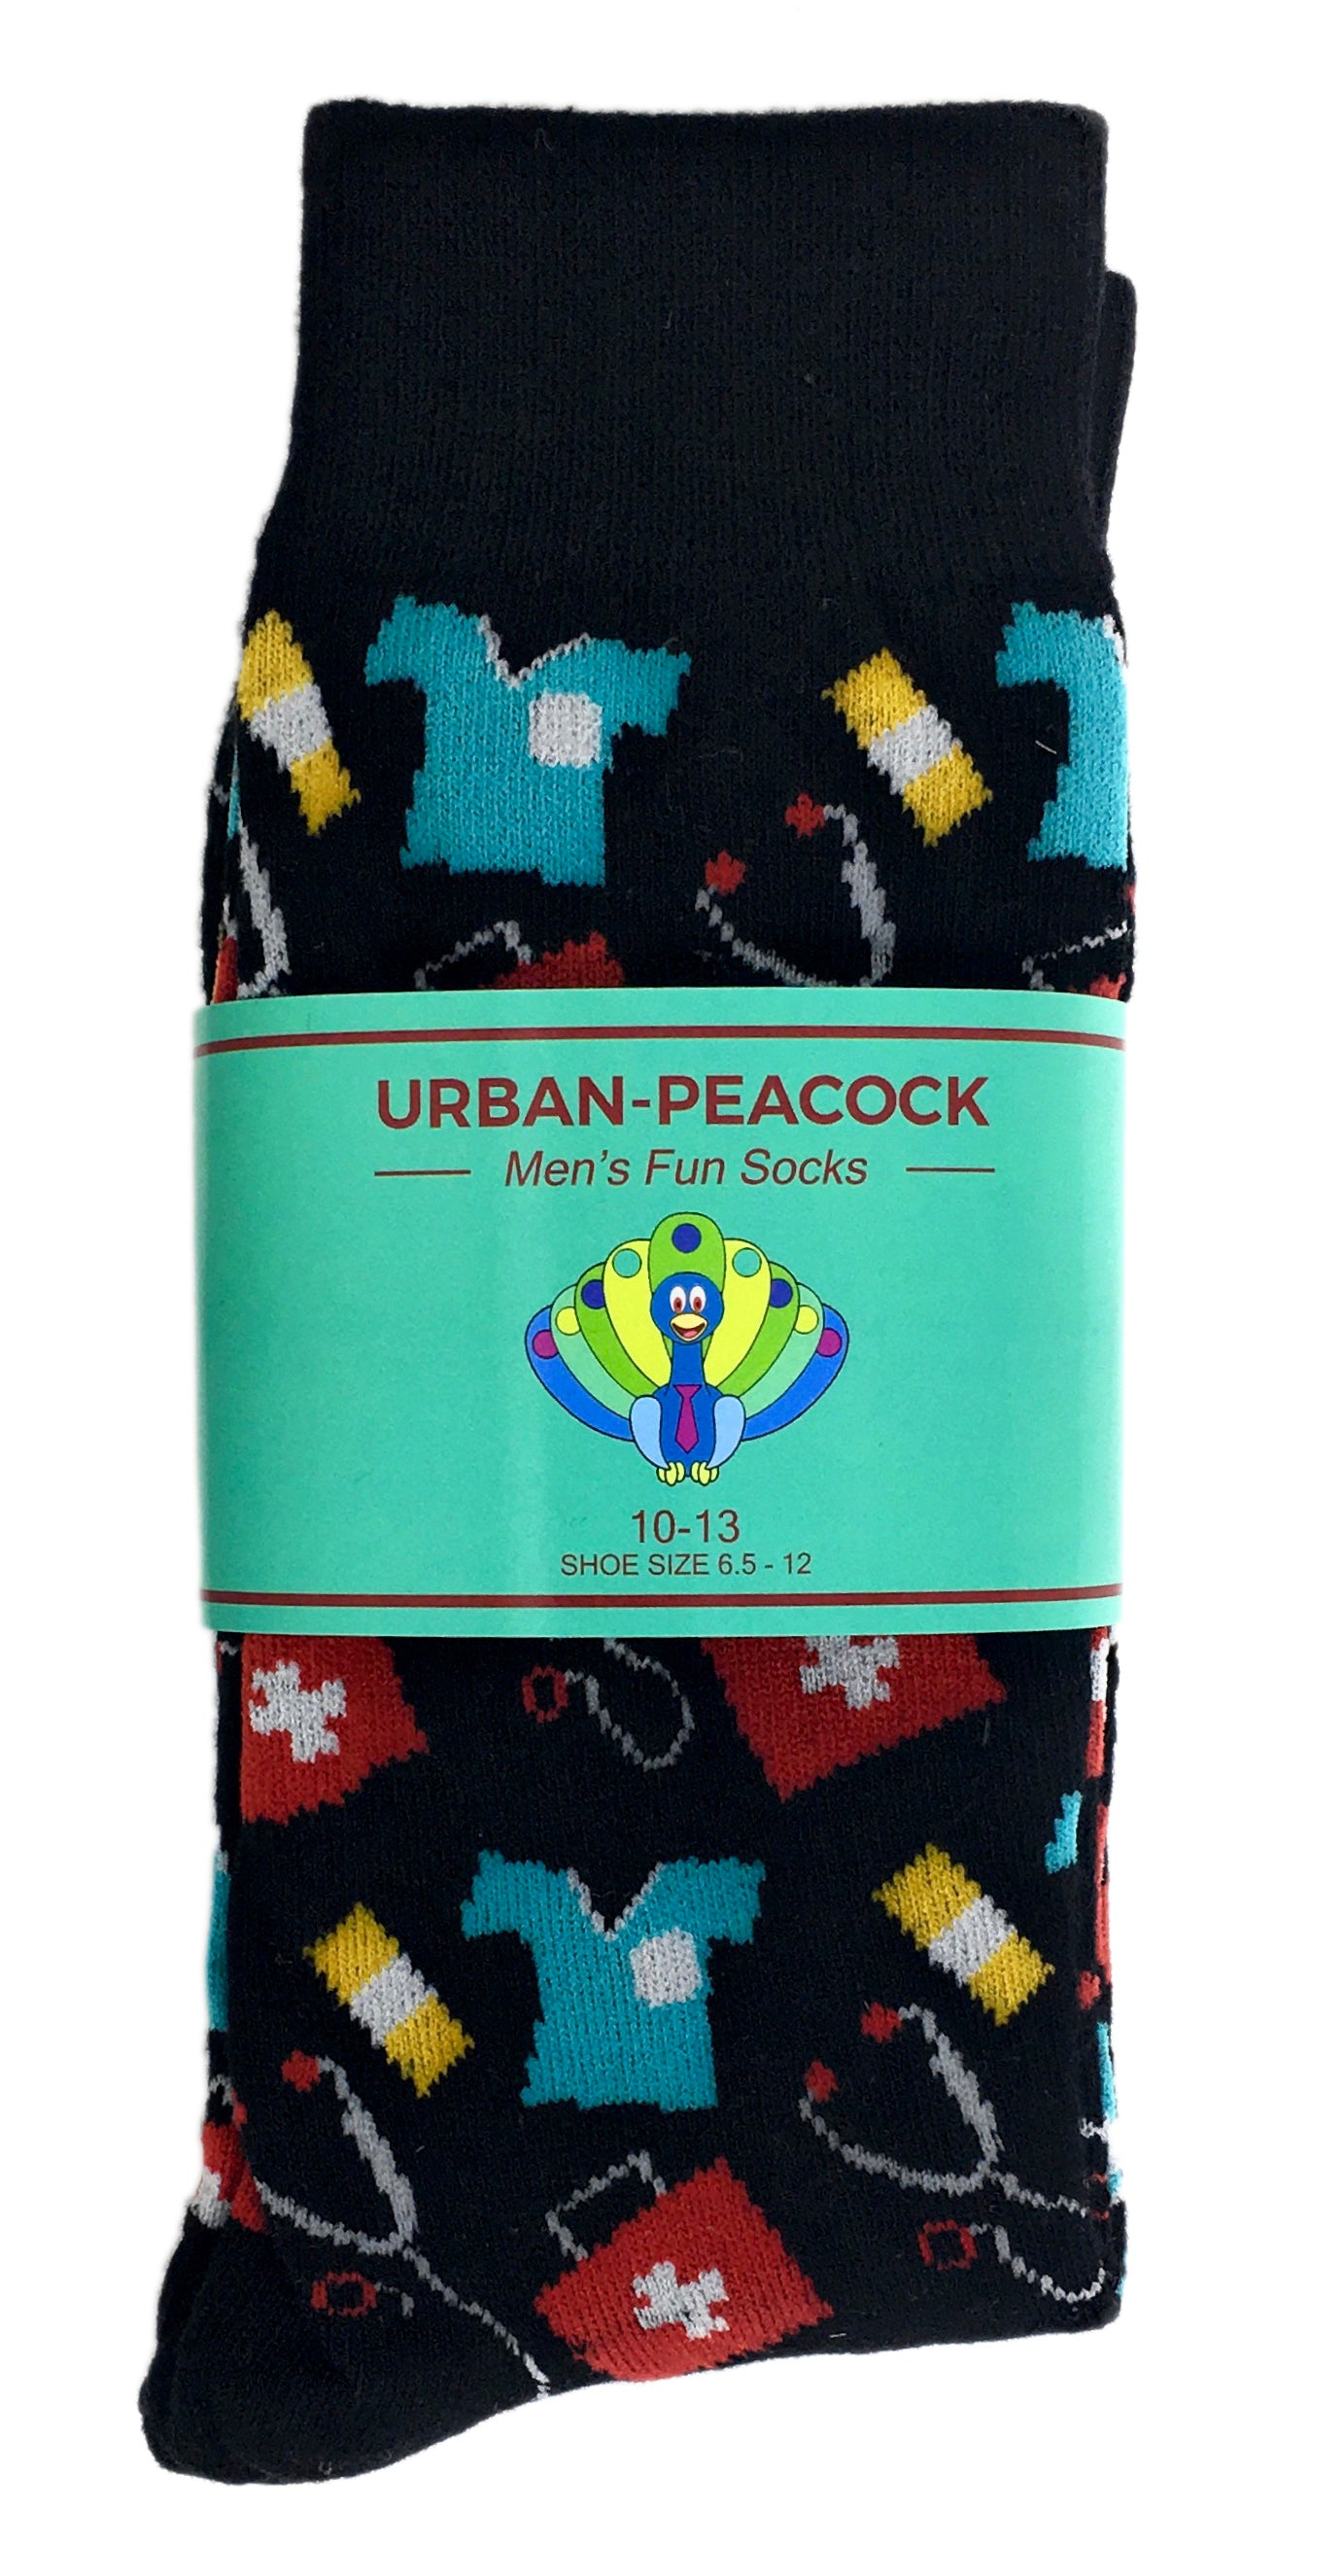 Urban-Peacock Men's Novelty Crew Socks - Doctor / Nurse - Black